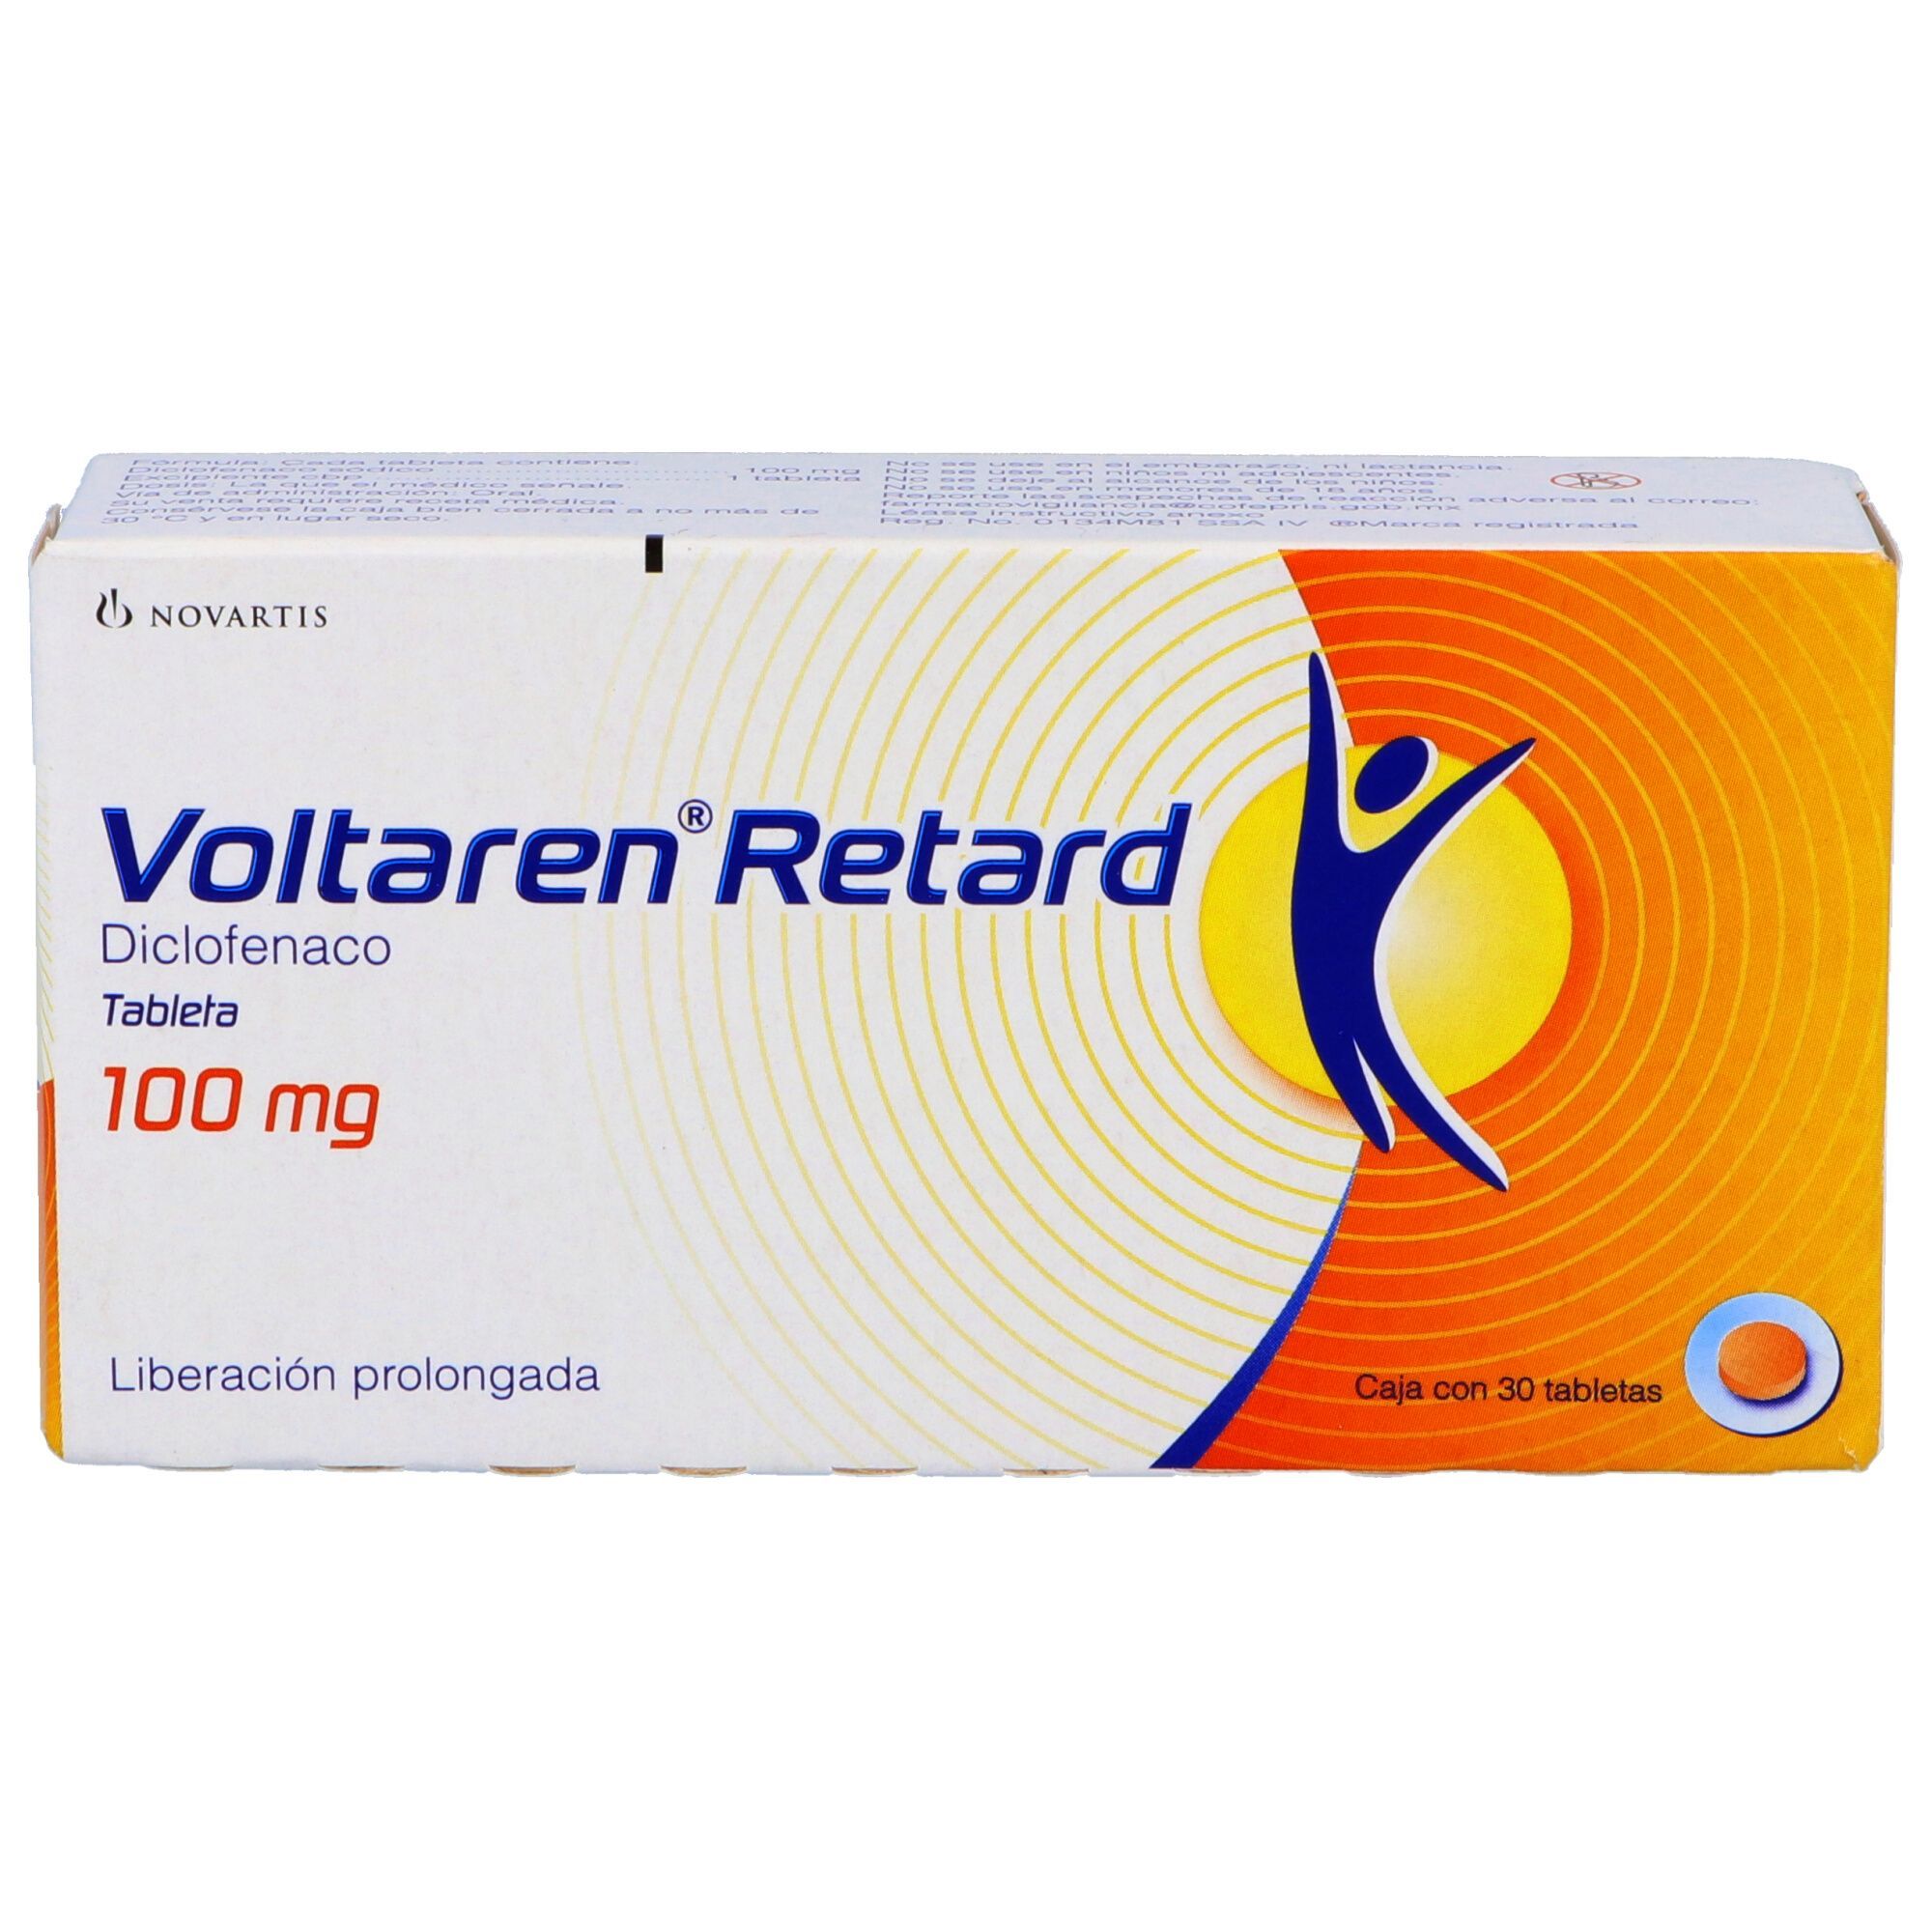 Precio Voltaren Retard 100 mg con 30 tabletas | Farmalisto MX